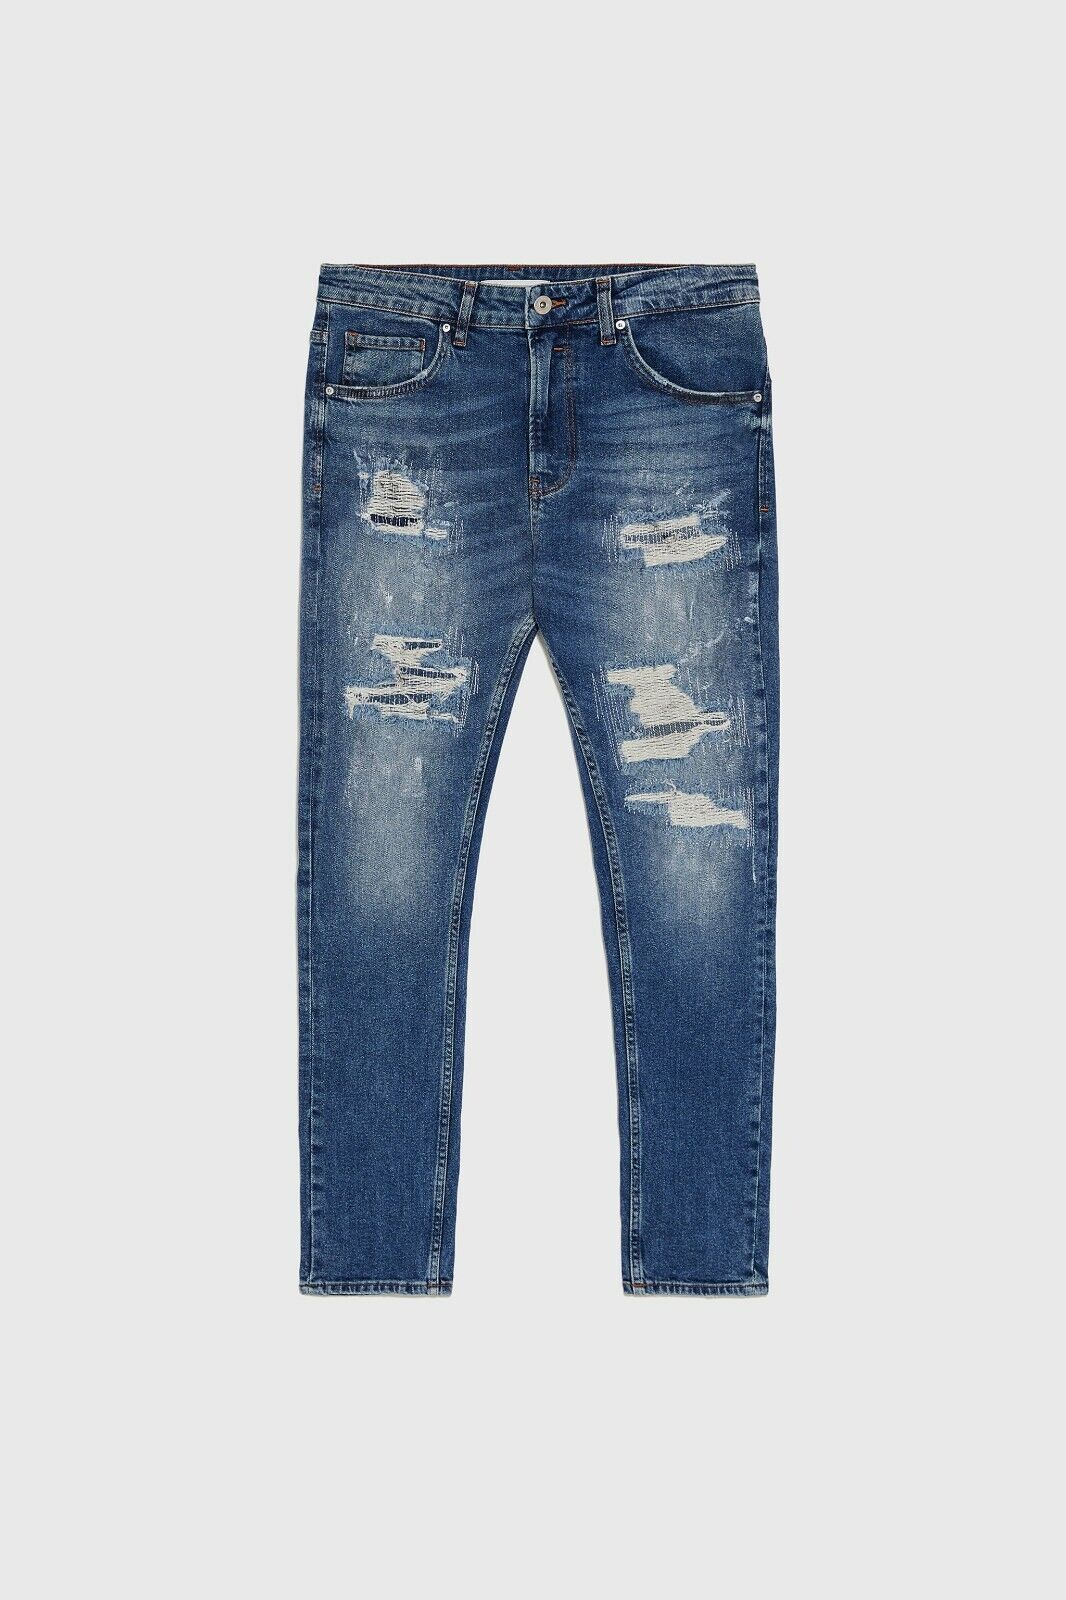 New Zara Paint Splattered Ripped Skinny Jeans US30 Blue 0905/380 denim | eBay